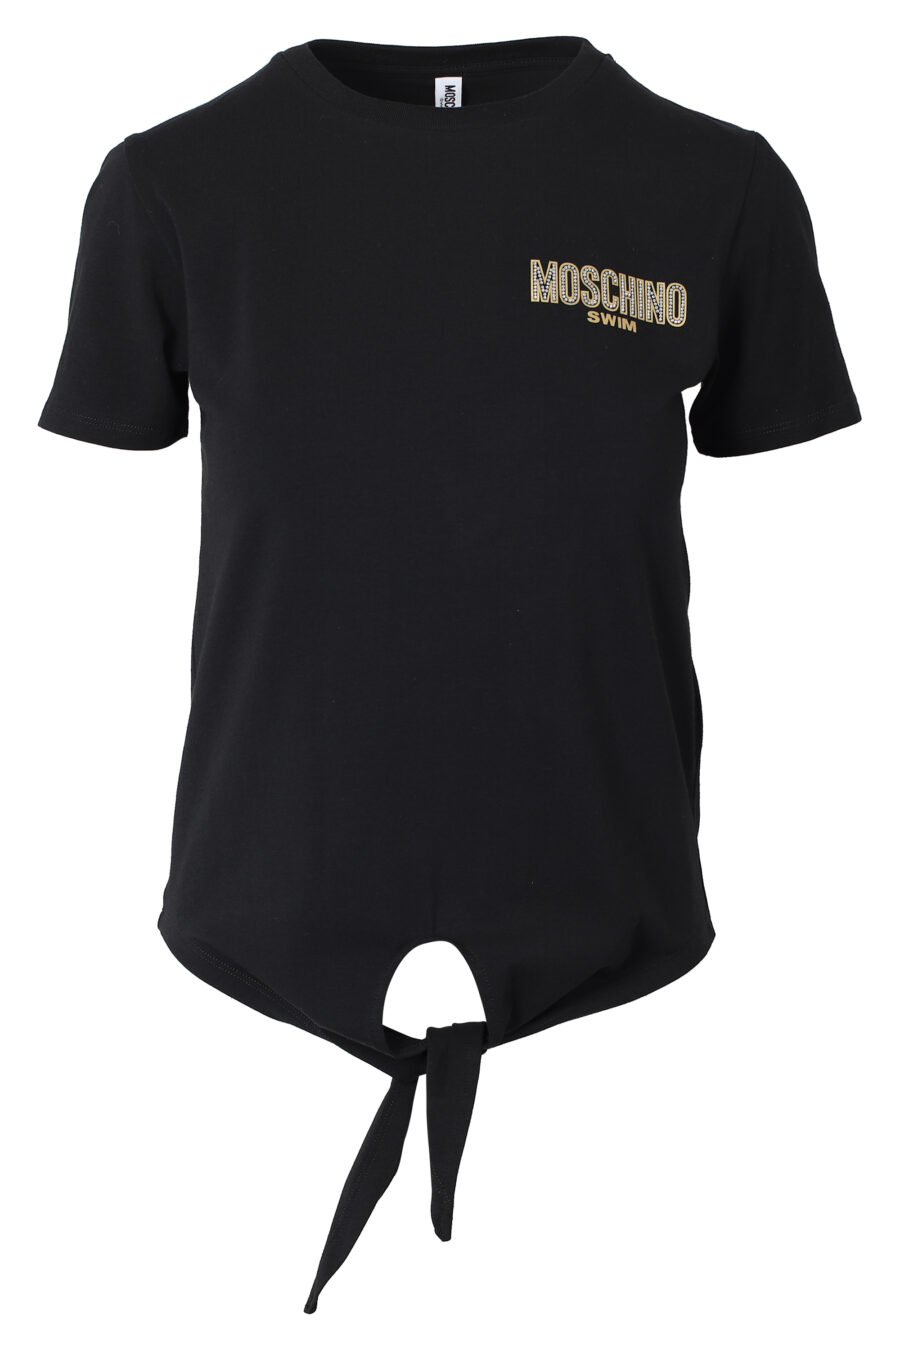 Camiseta negra con minilogo dorado con strass y nudo frontal - IMG 9833